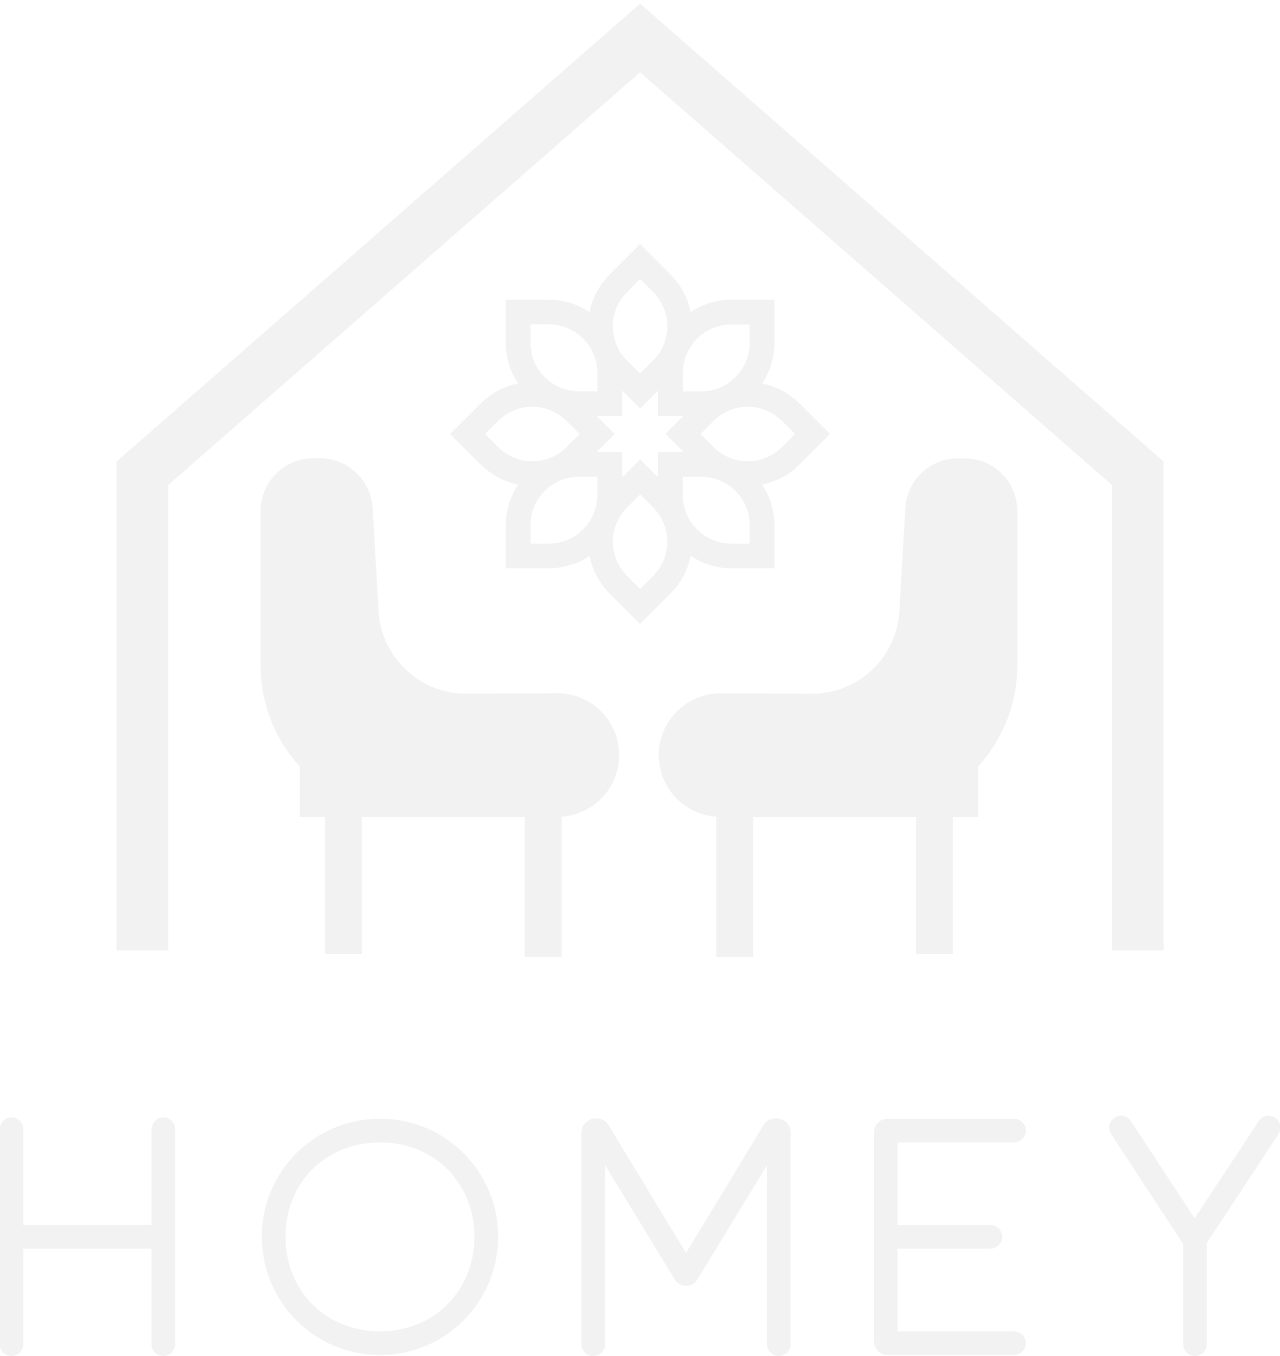 Homey's logo